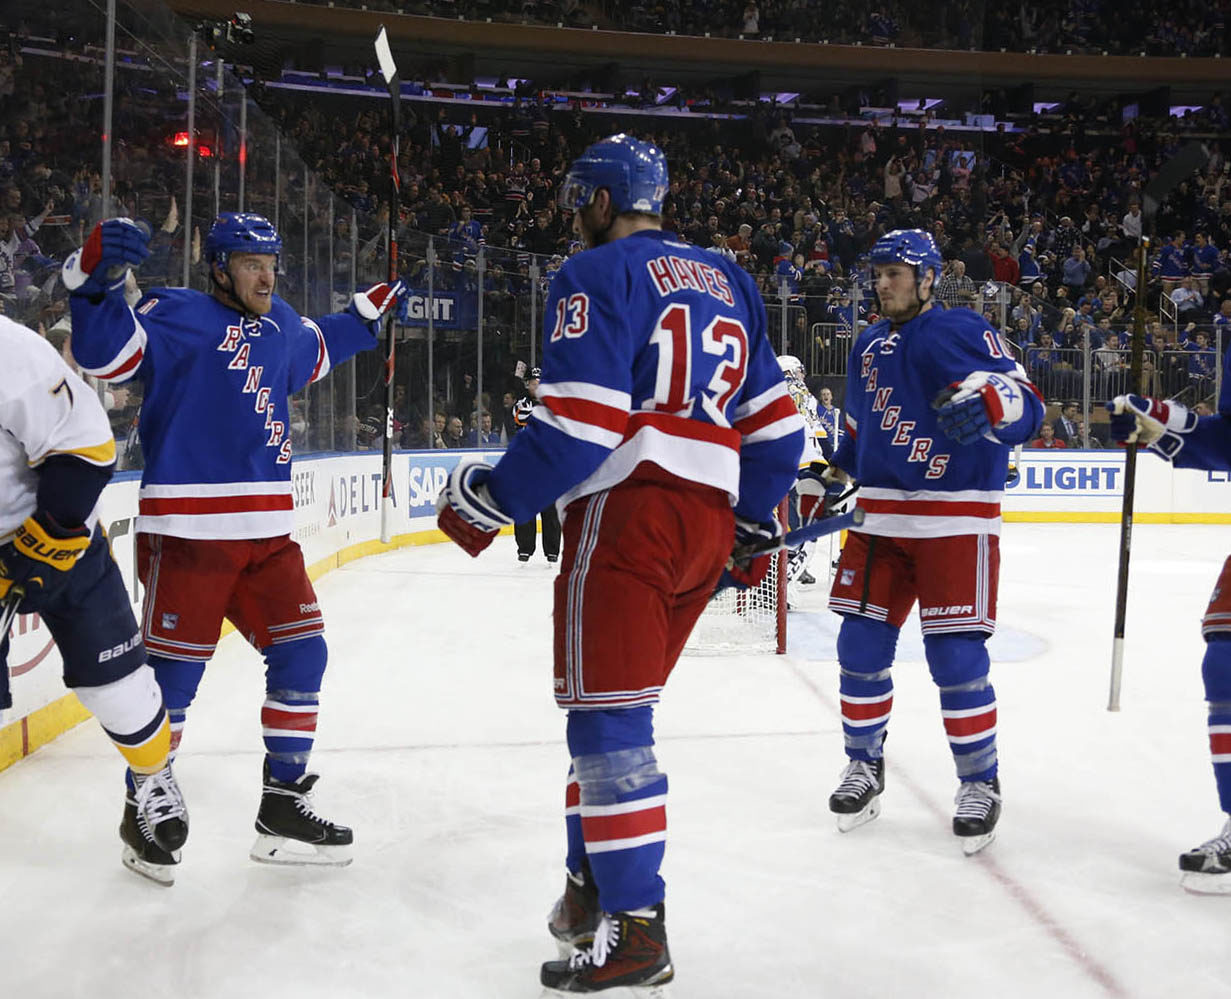 February 9, 2017: The New York Rangers face the Nashville Predators at Madison Square Garden in New York City.